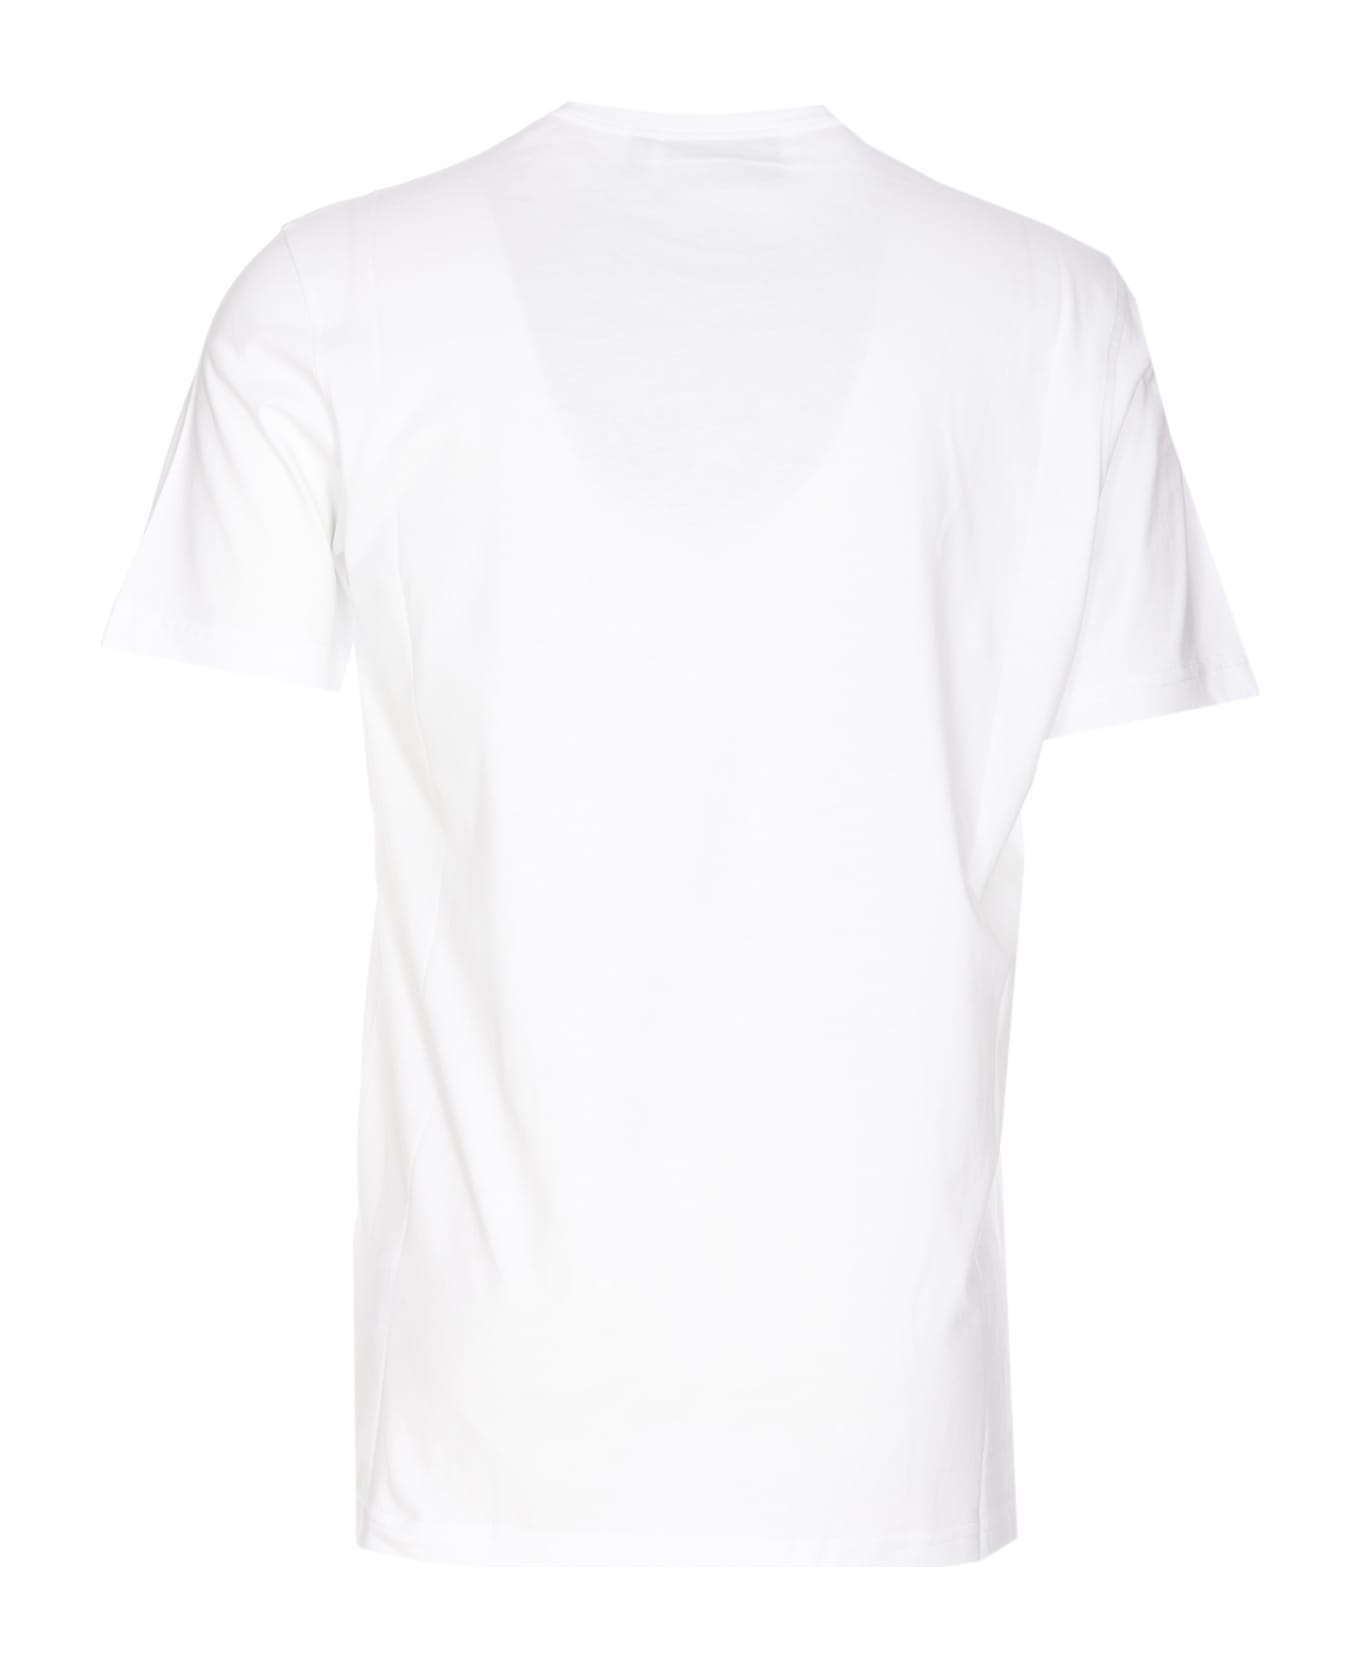 Belstaff Logo T-shirt - White シャツ